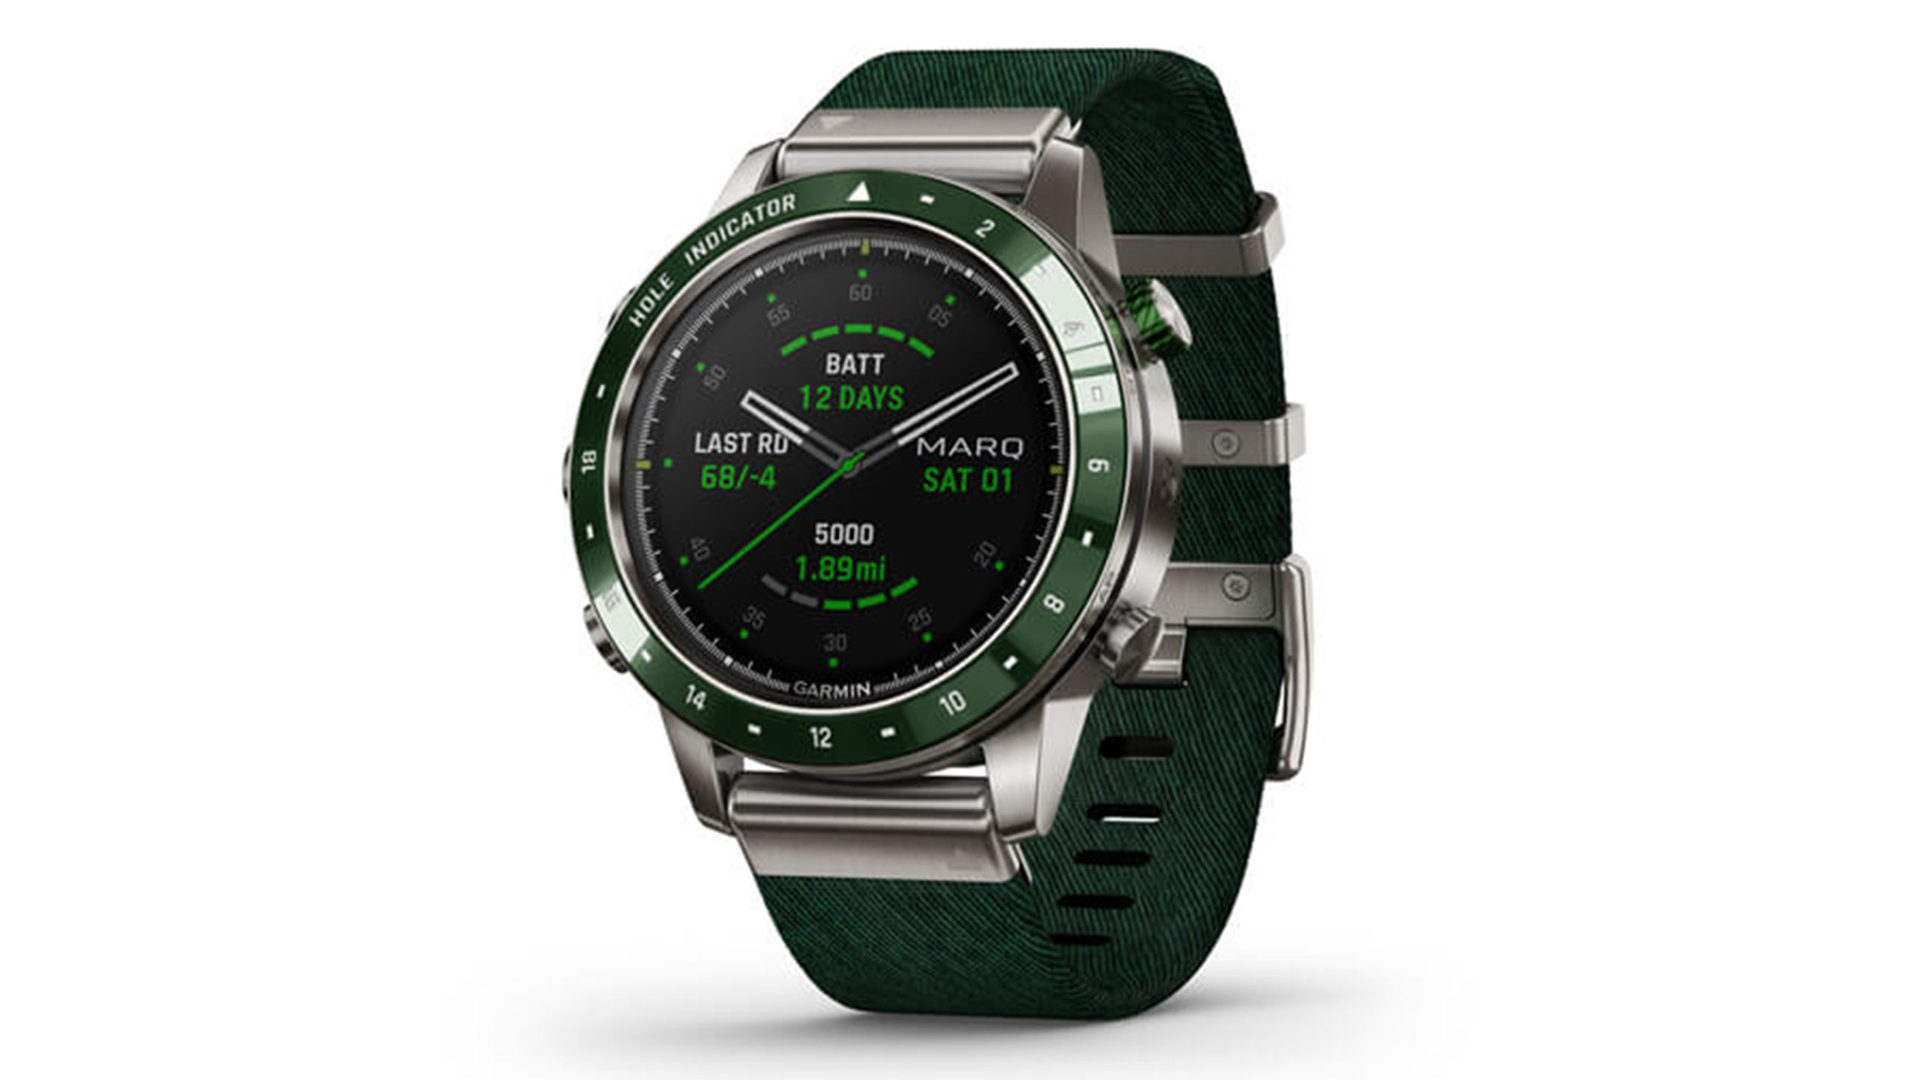 A product image of the Garmin Marq Golfer represents Garmin's high-end golf GPS watch.